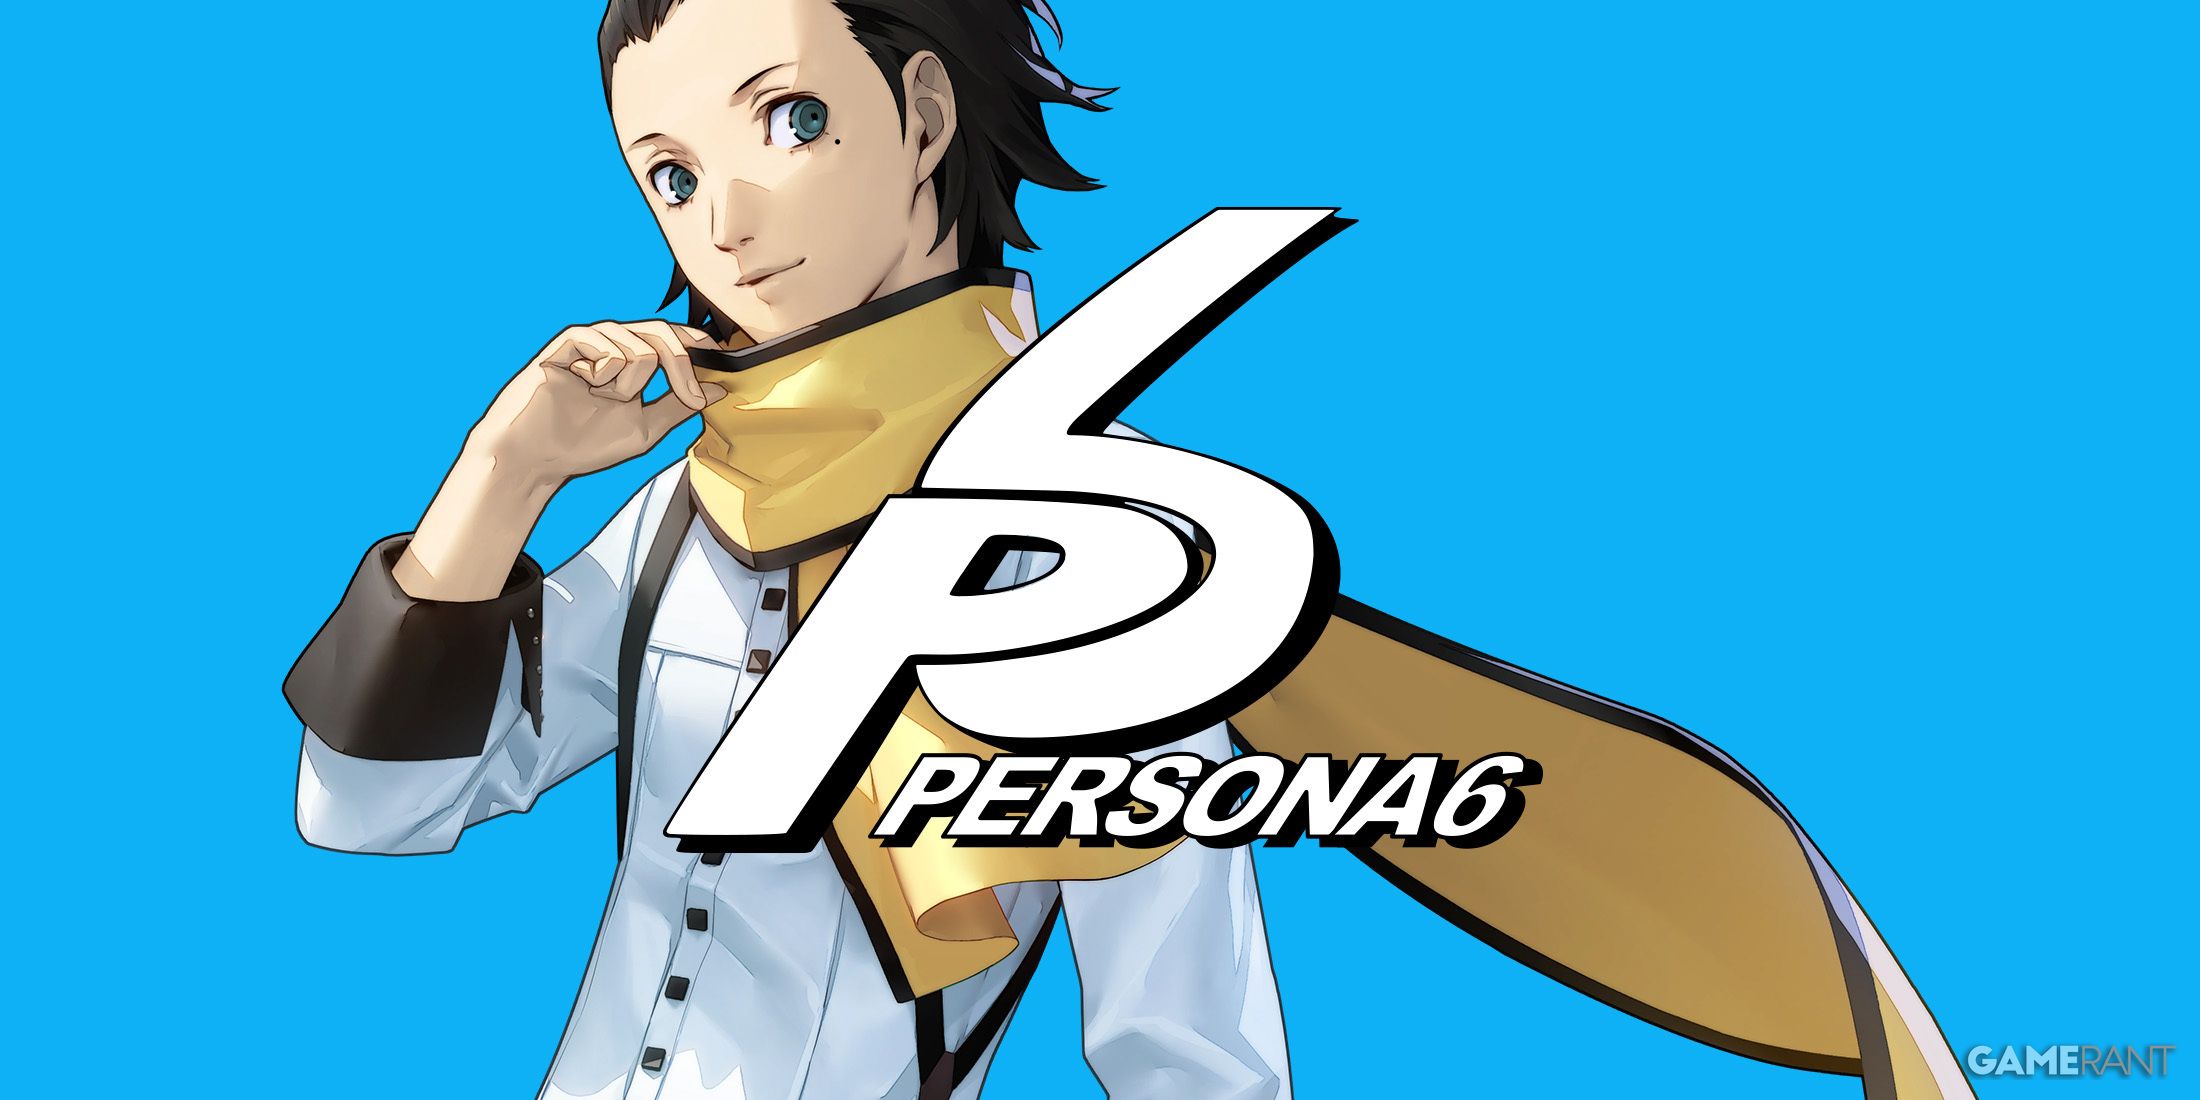 Ryoji from Persona 3 with a fake Persona 6 logo